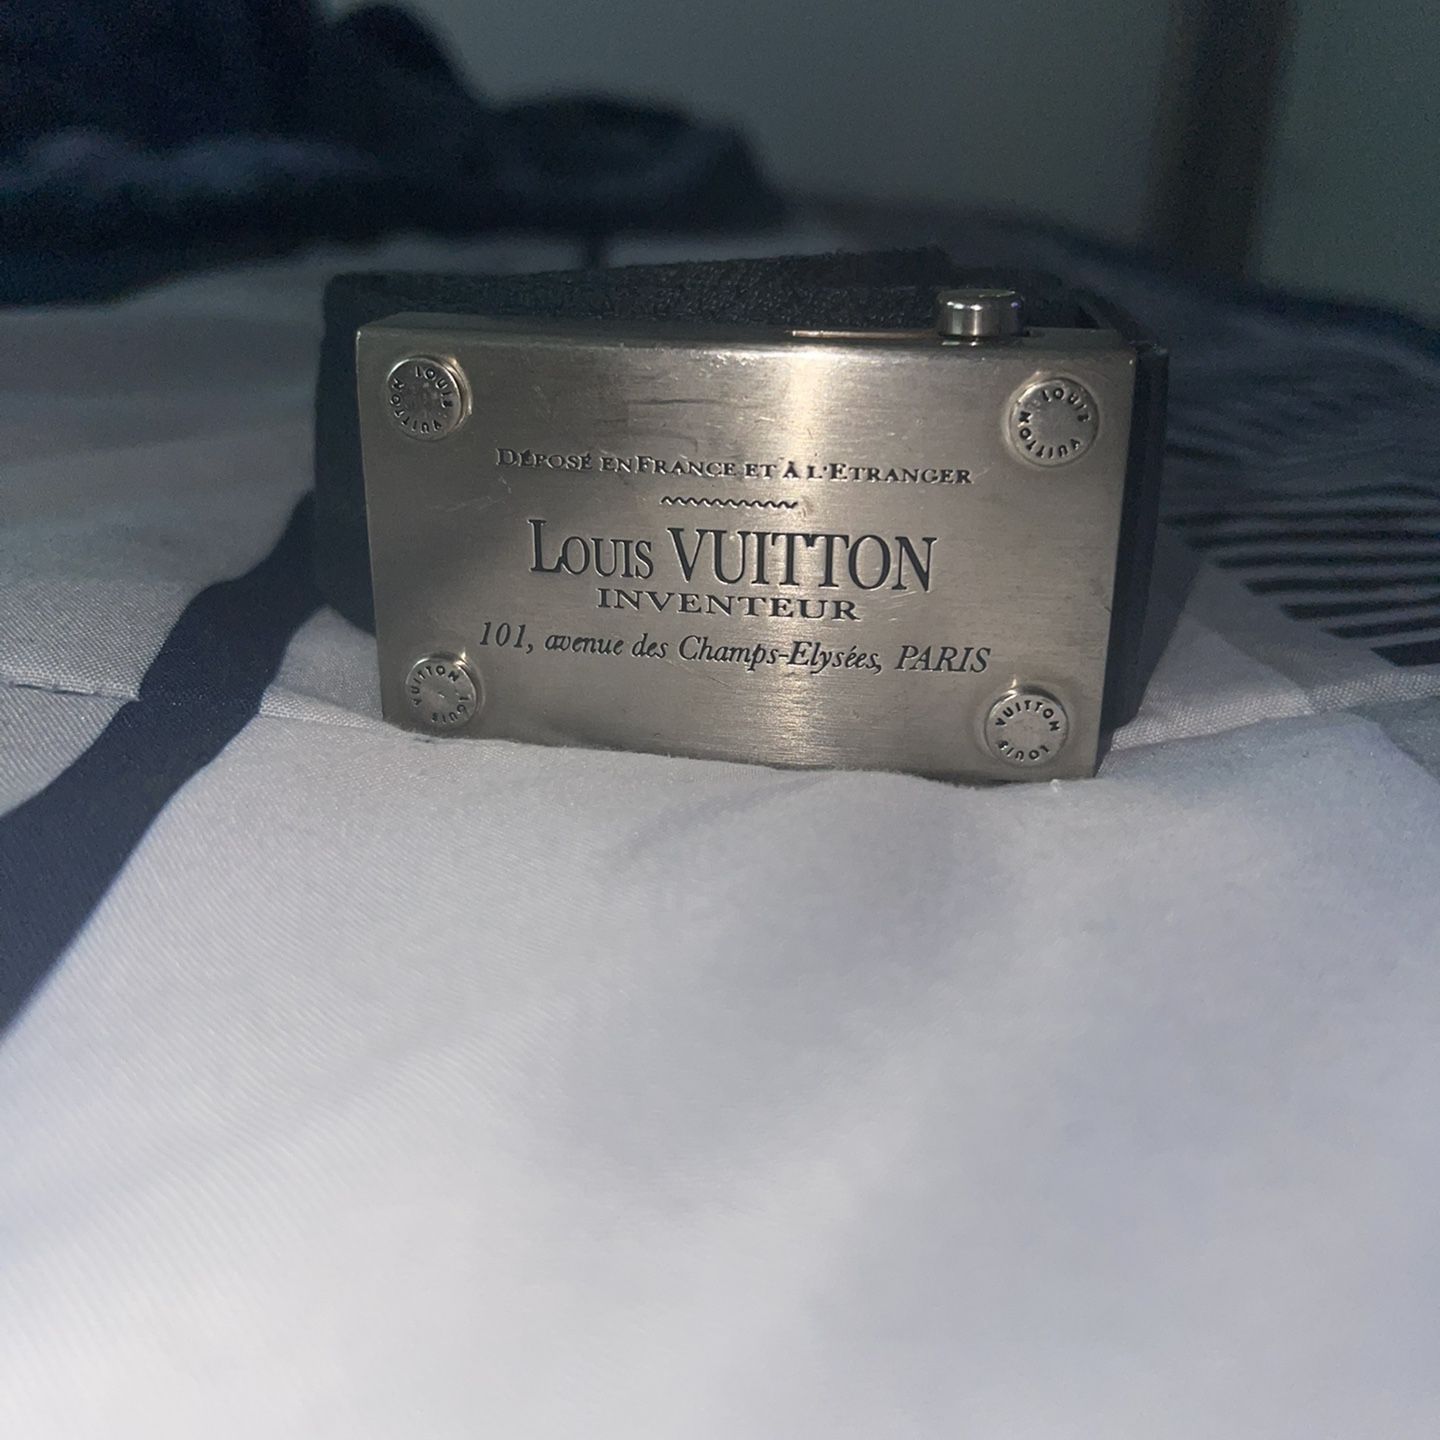 Louis Vuitton Inventeur Belt for Sale in Camarillo, CA - OfferUp